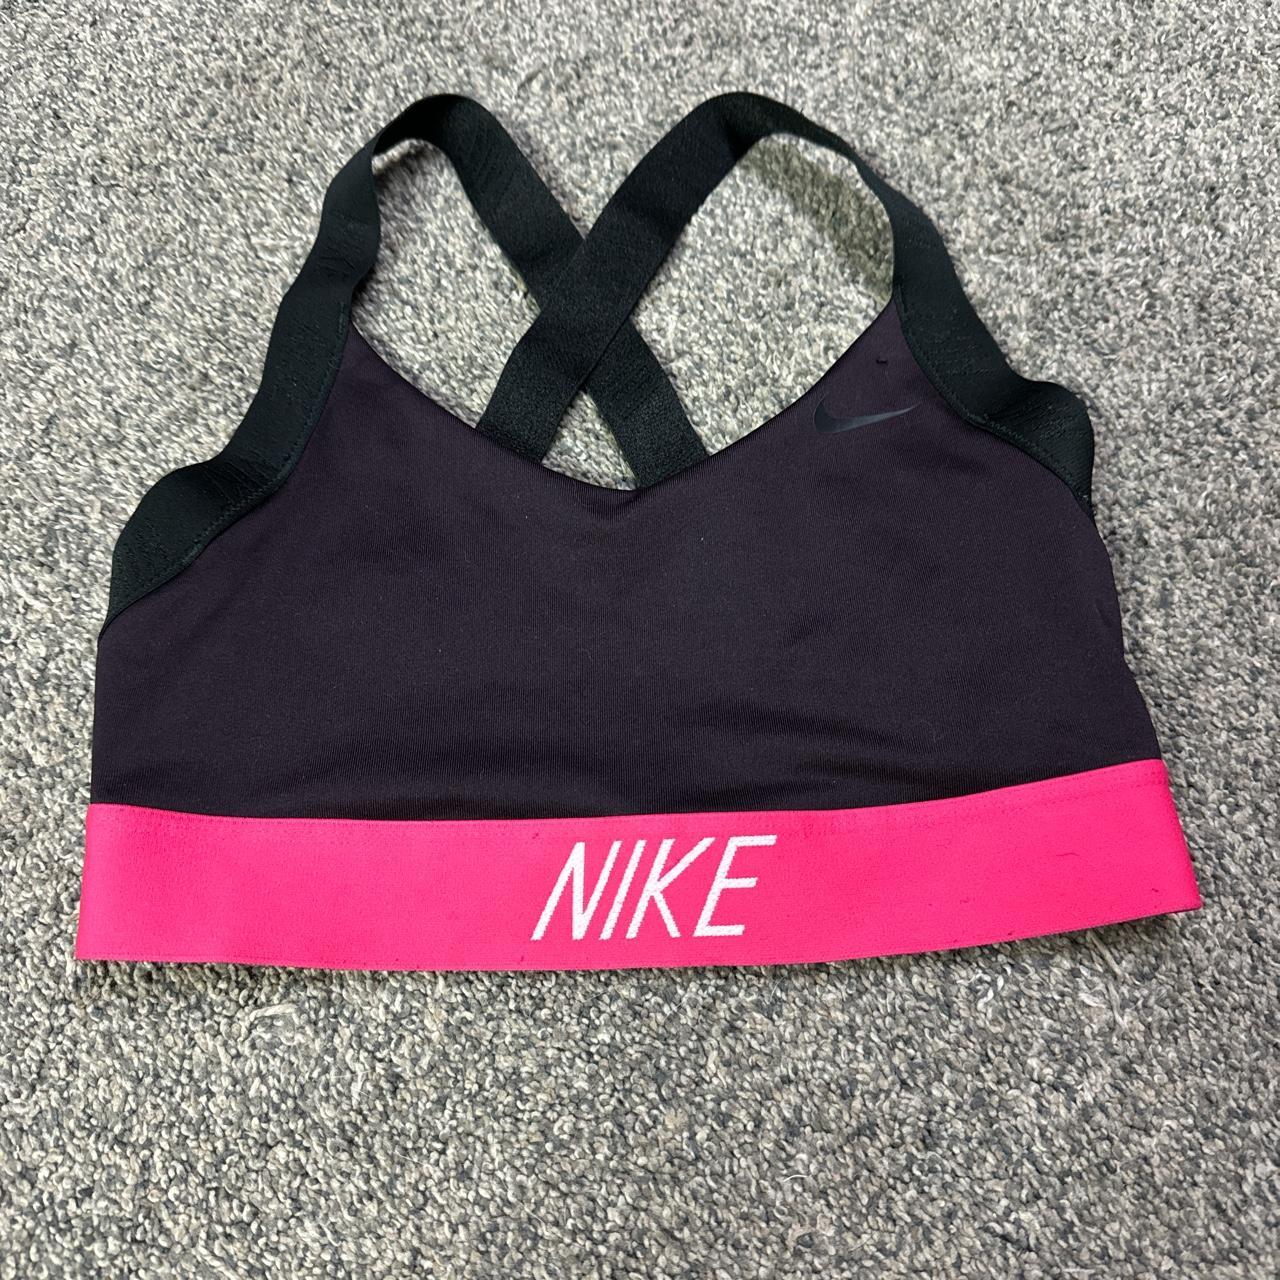 Purple Nike sports bra, size medium (grey inserts - Depop